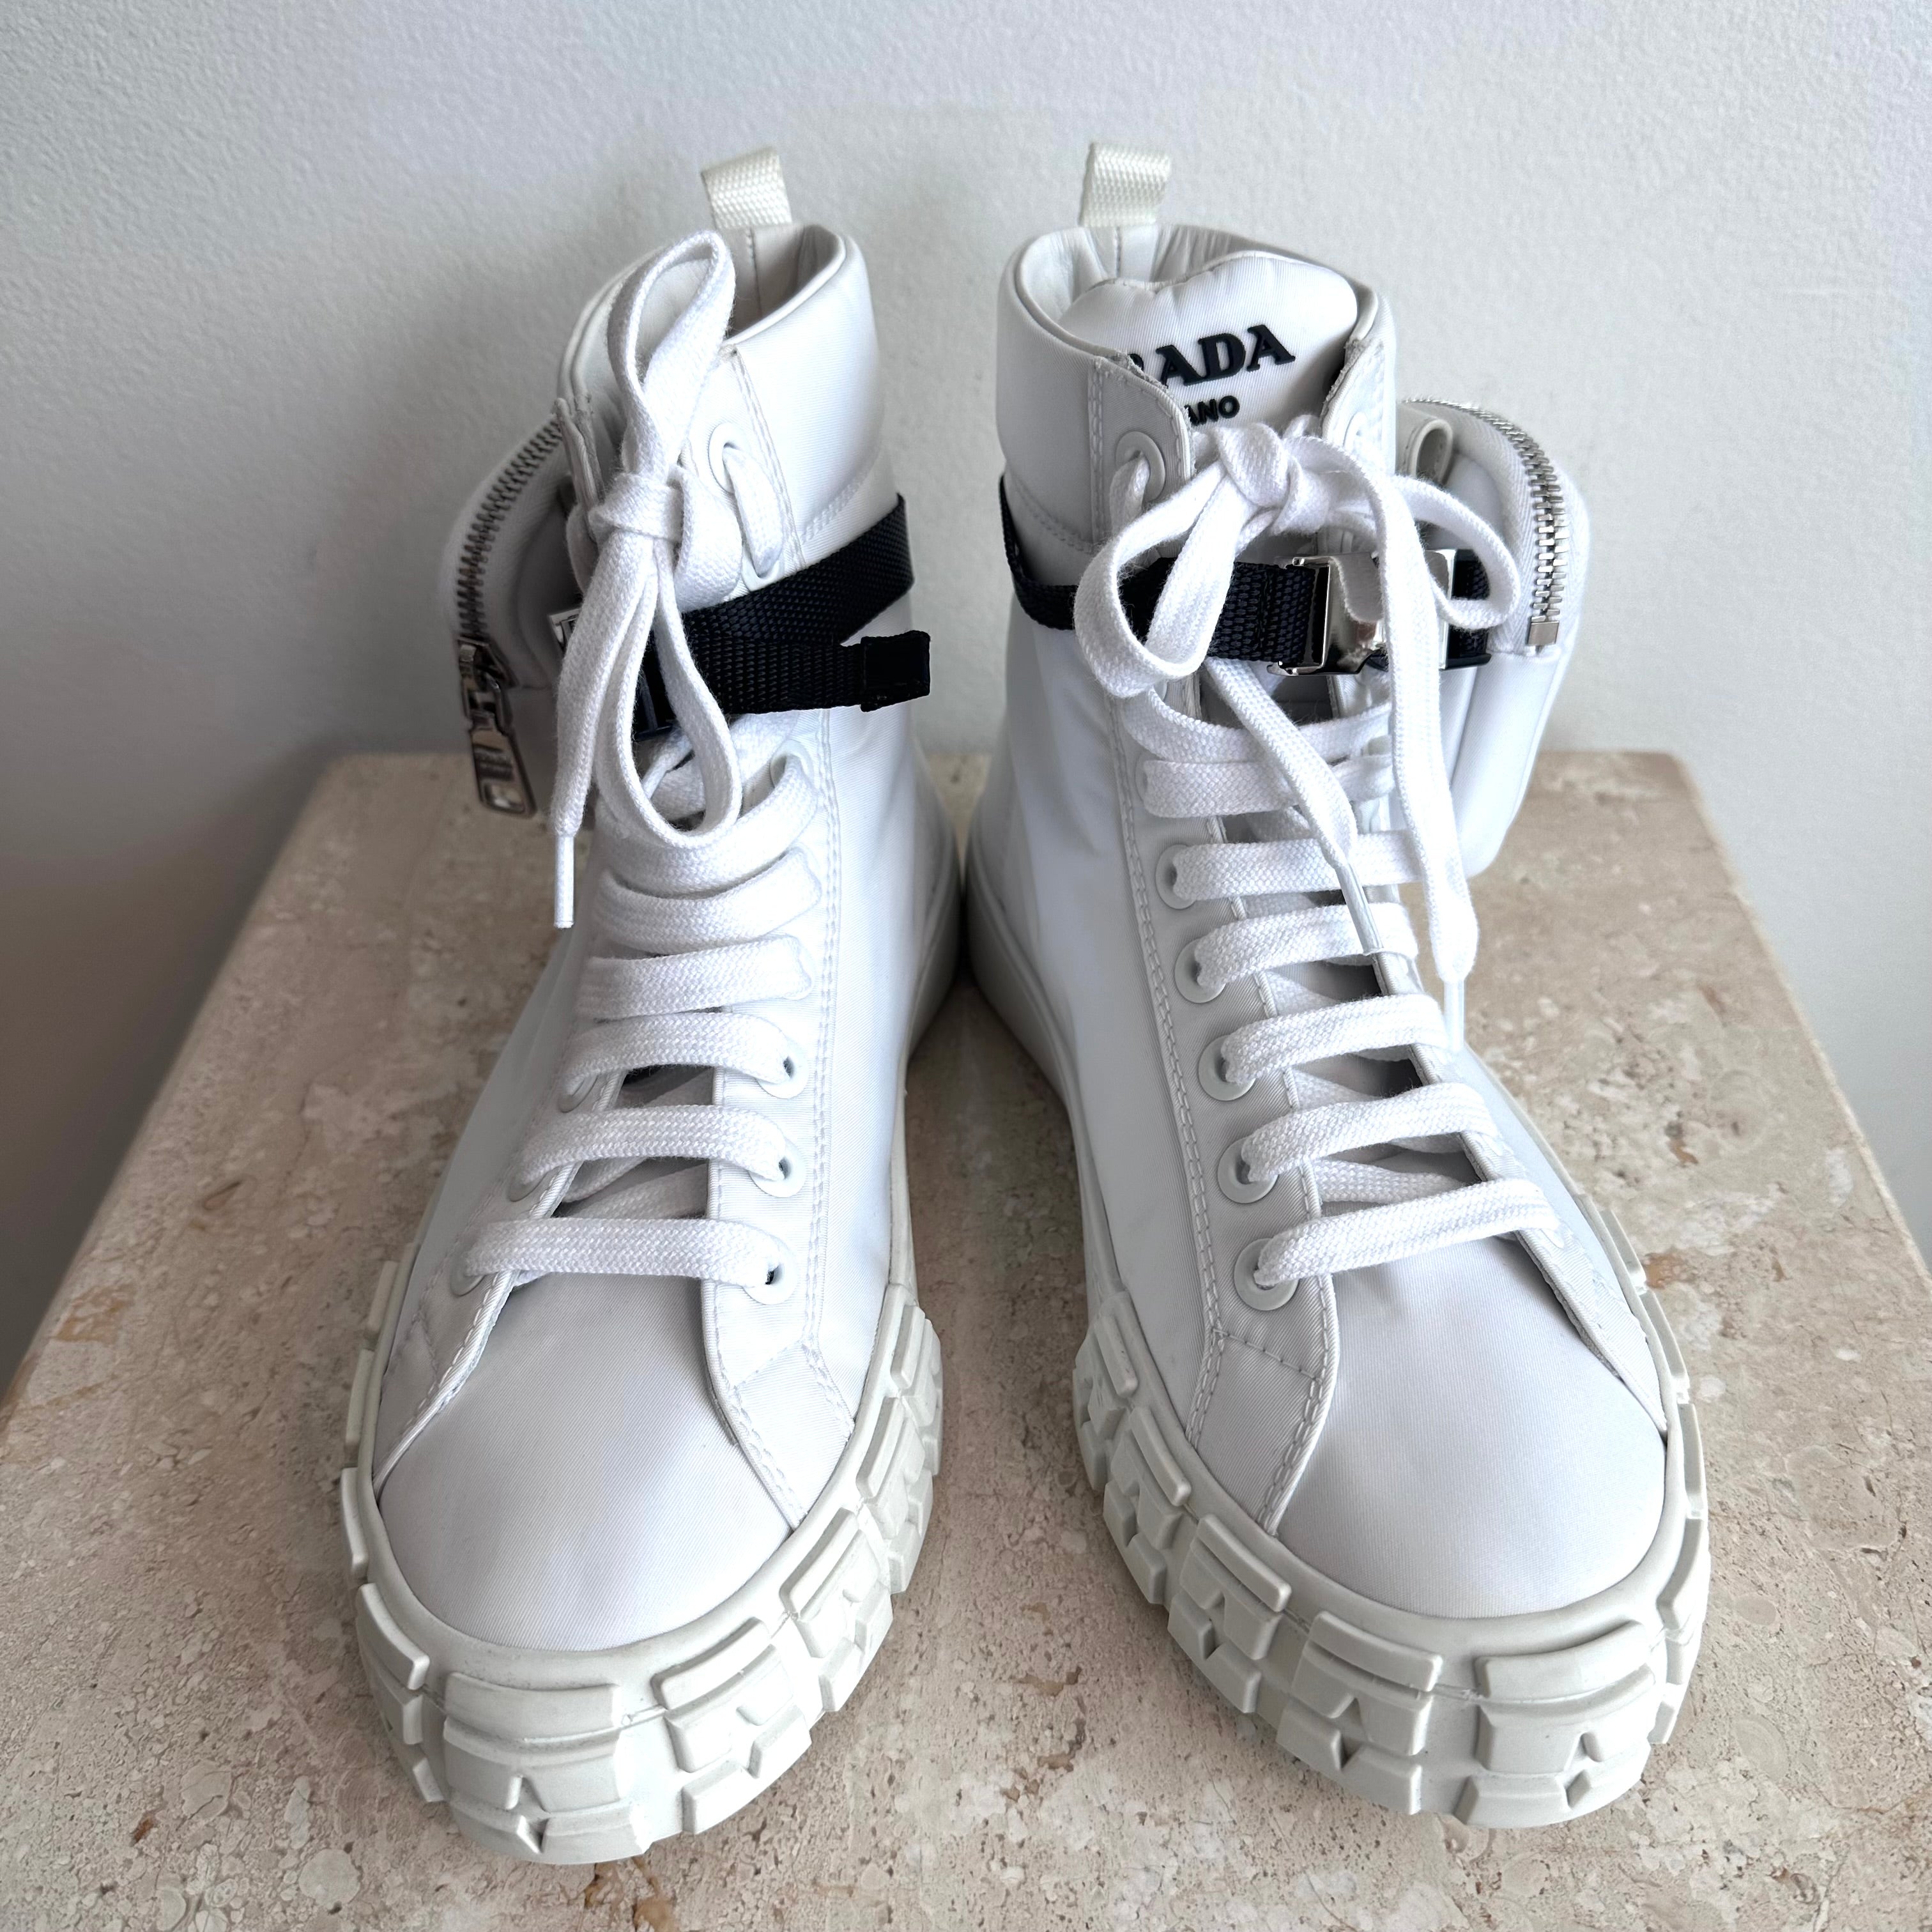 Pre-Owned PRADA Nylon White HighTop Sneakers